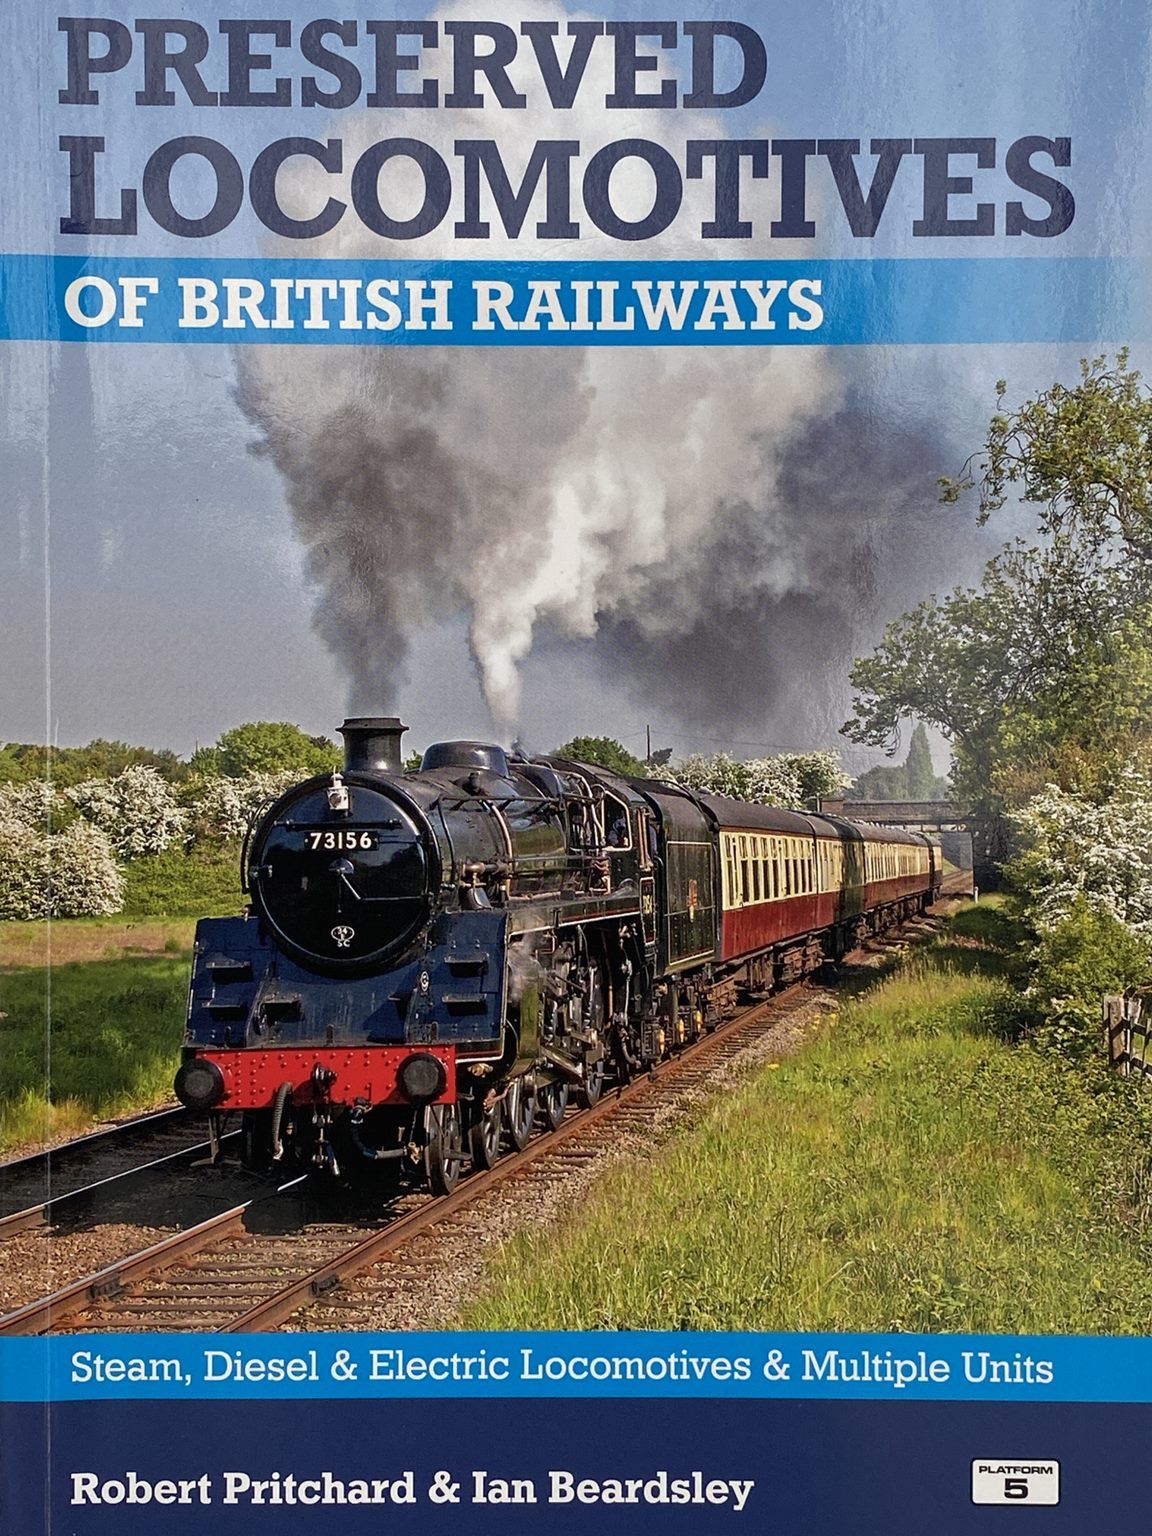 PRESERVED LOCOMOTIVES of British Railways